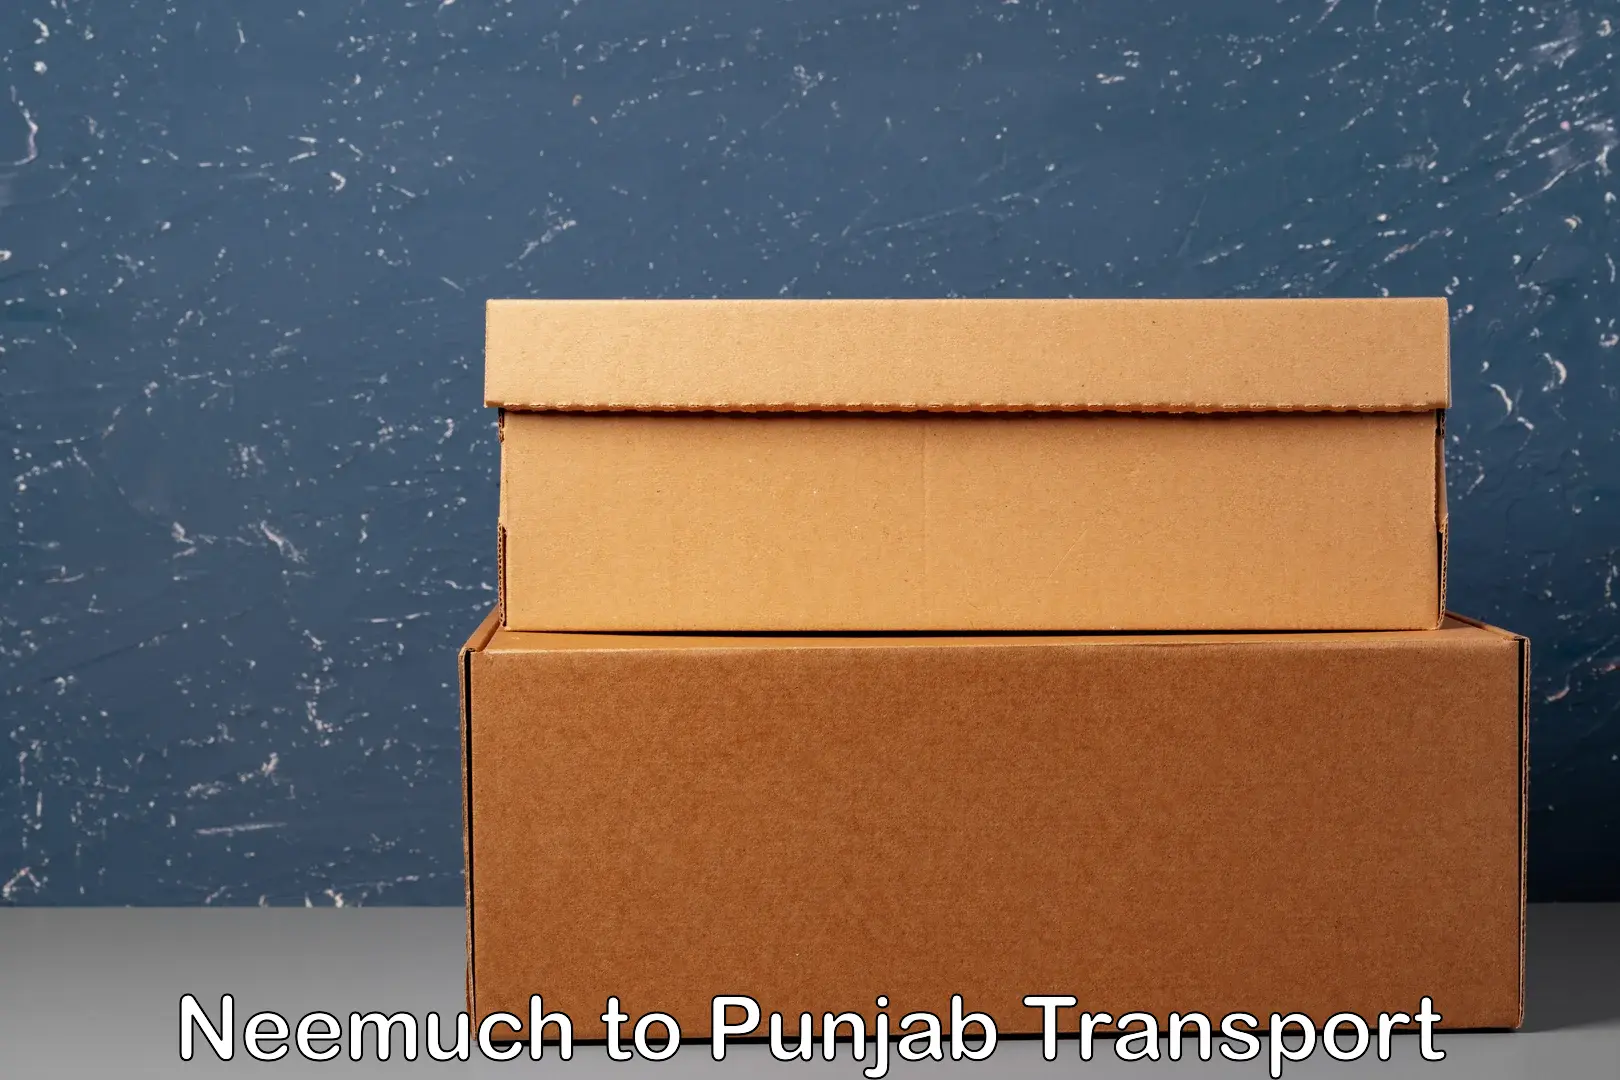 Online transport service Neemuch to Punjab